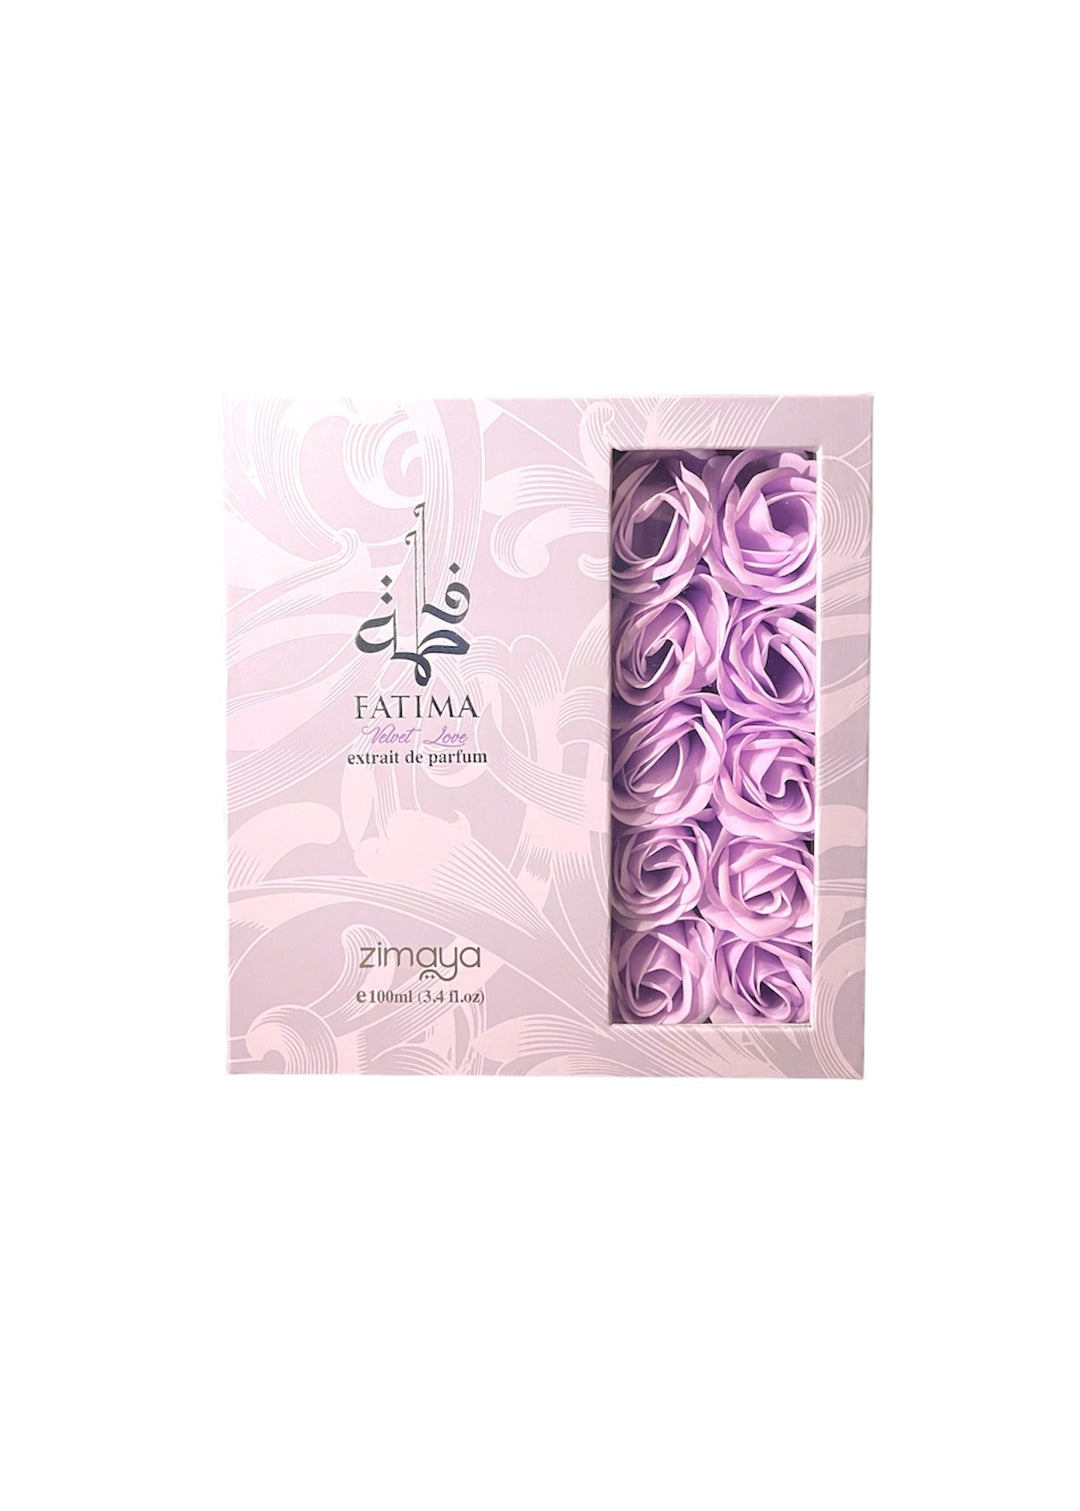 Afnan Zimaya Fatima Velvet Love Extrait de Parfum For Women, 3.4 Ounce